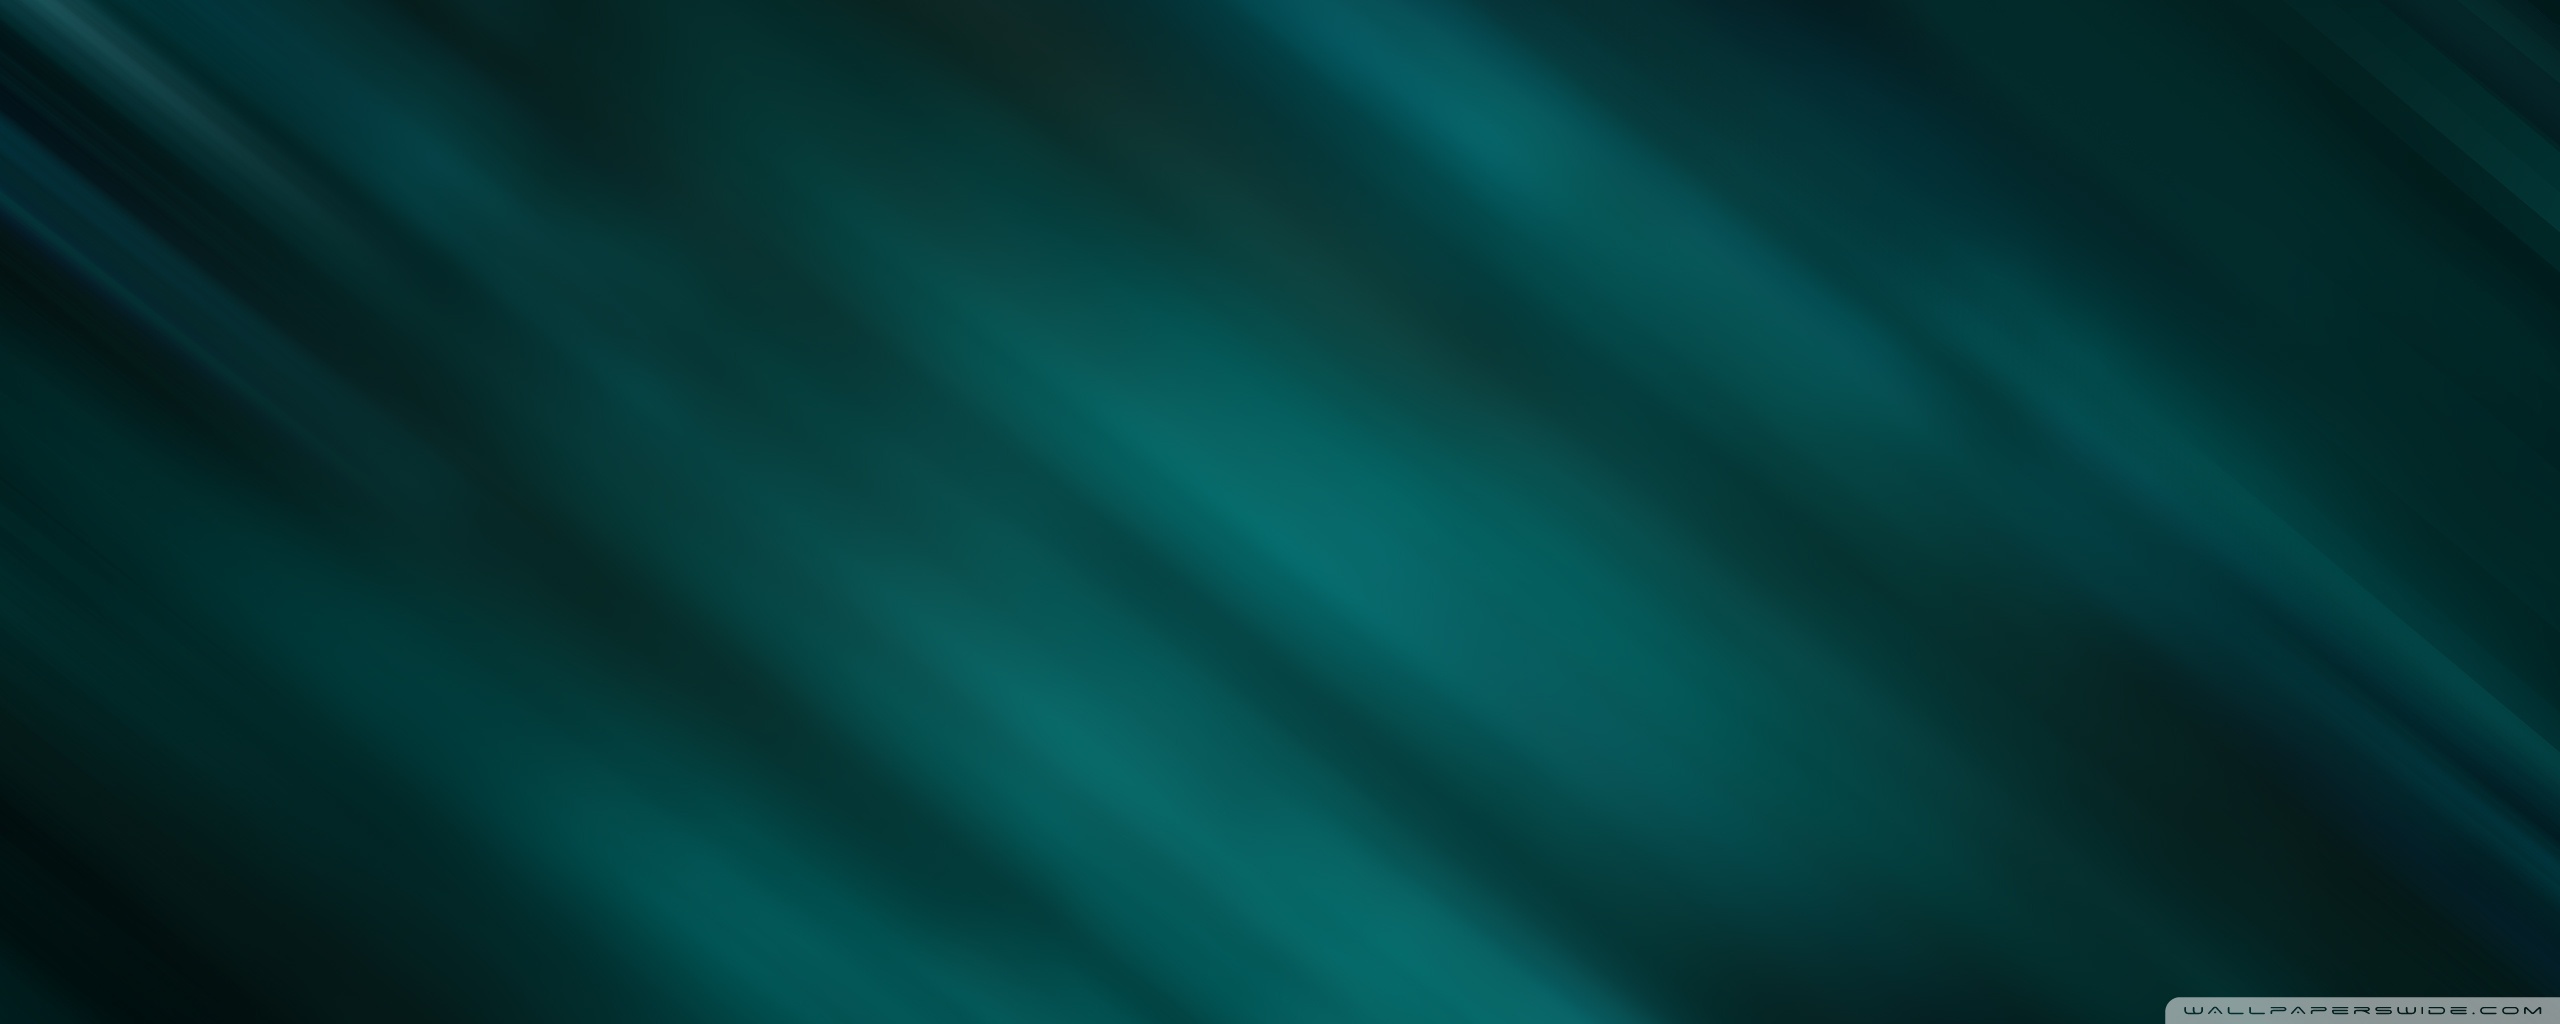 Abstract Teal Green Ultra HD Desktop Background Wallpaper for 4K UHD TV ...